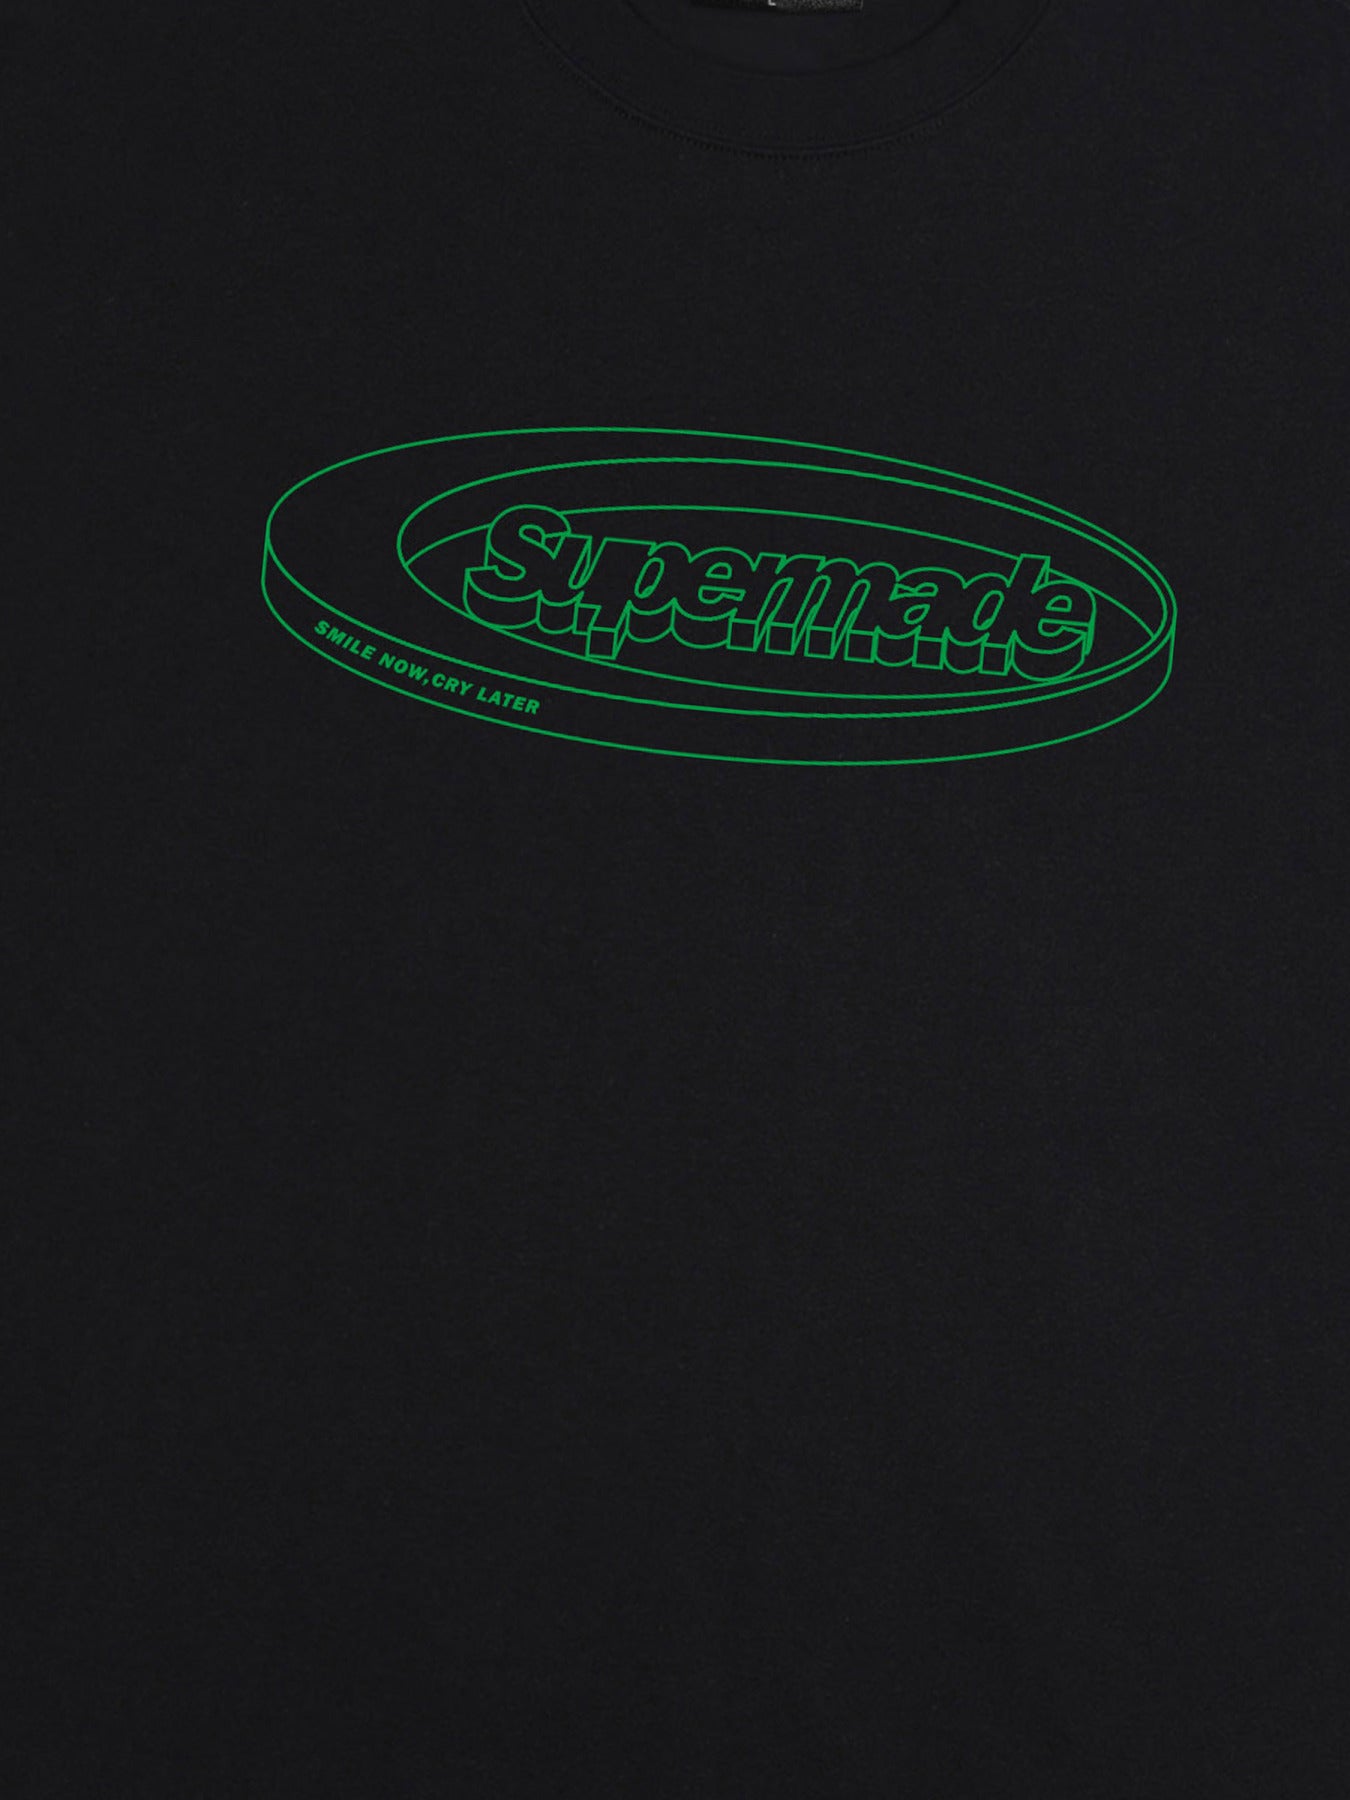 The Supermade Font Logo Printing T-shirt